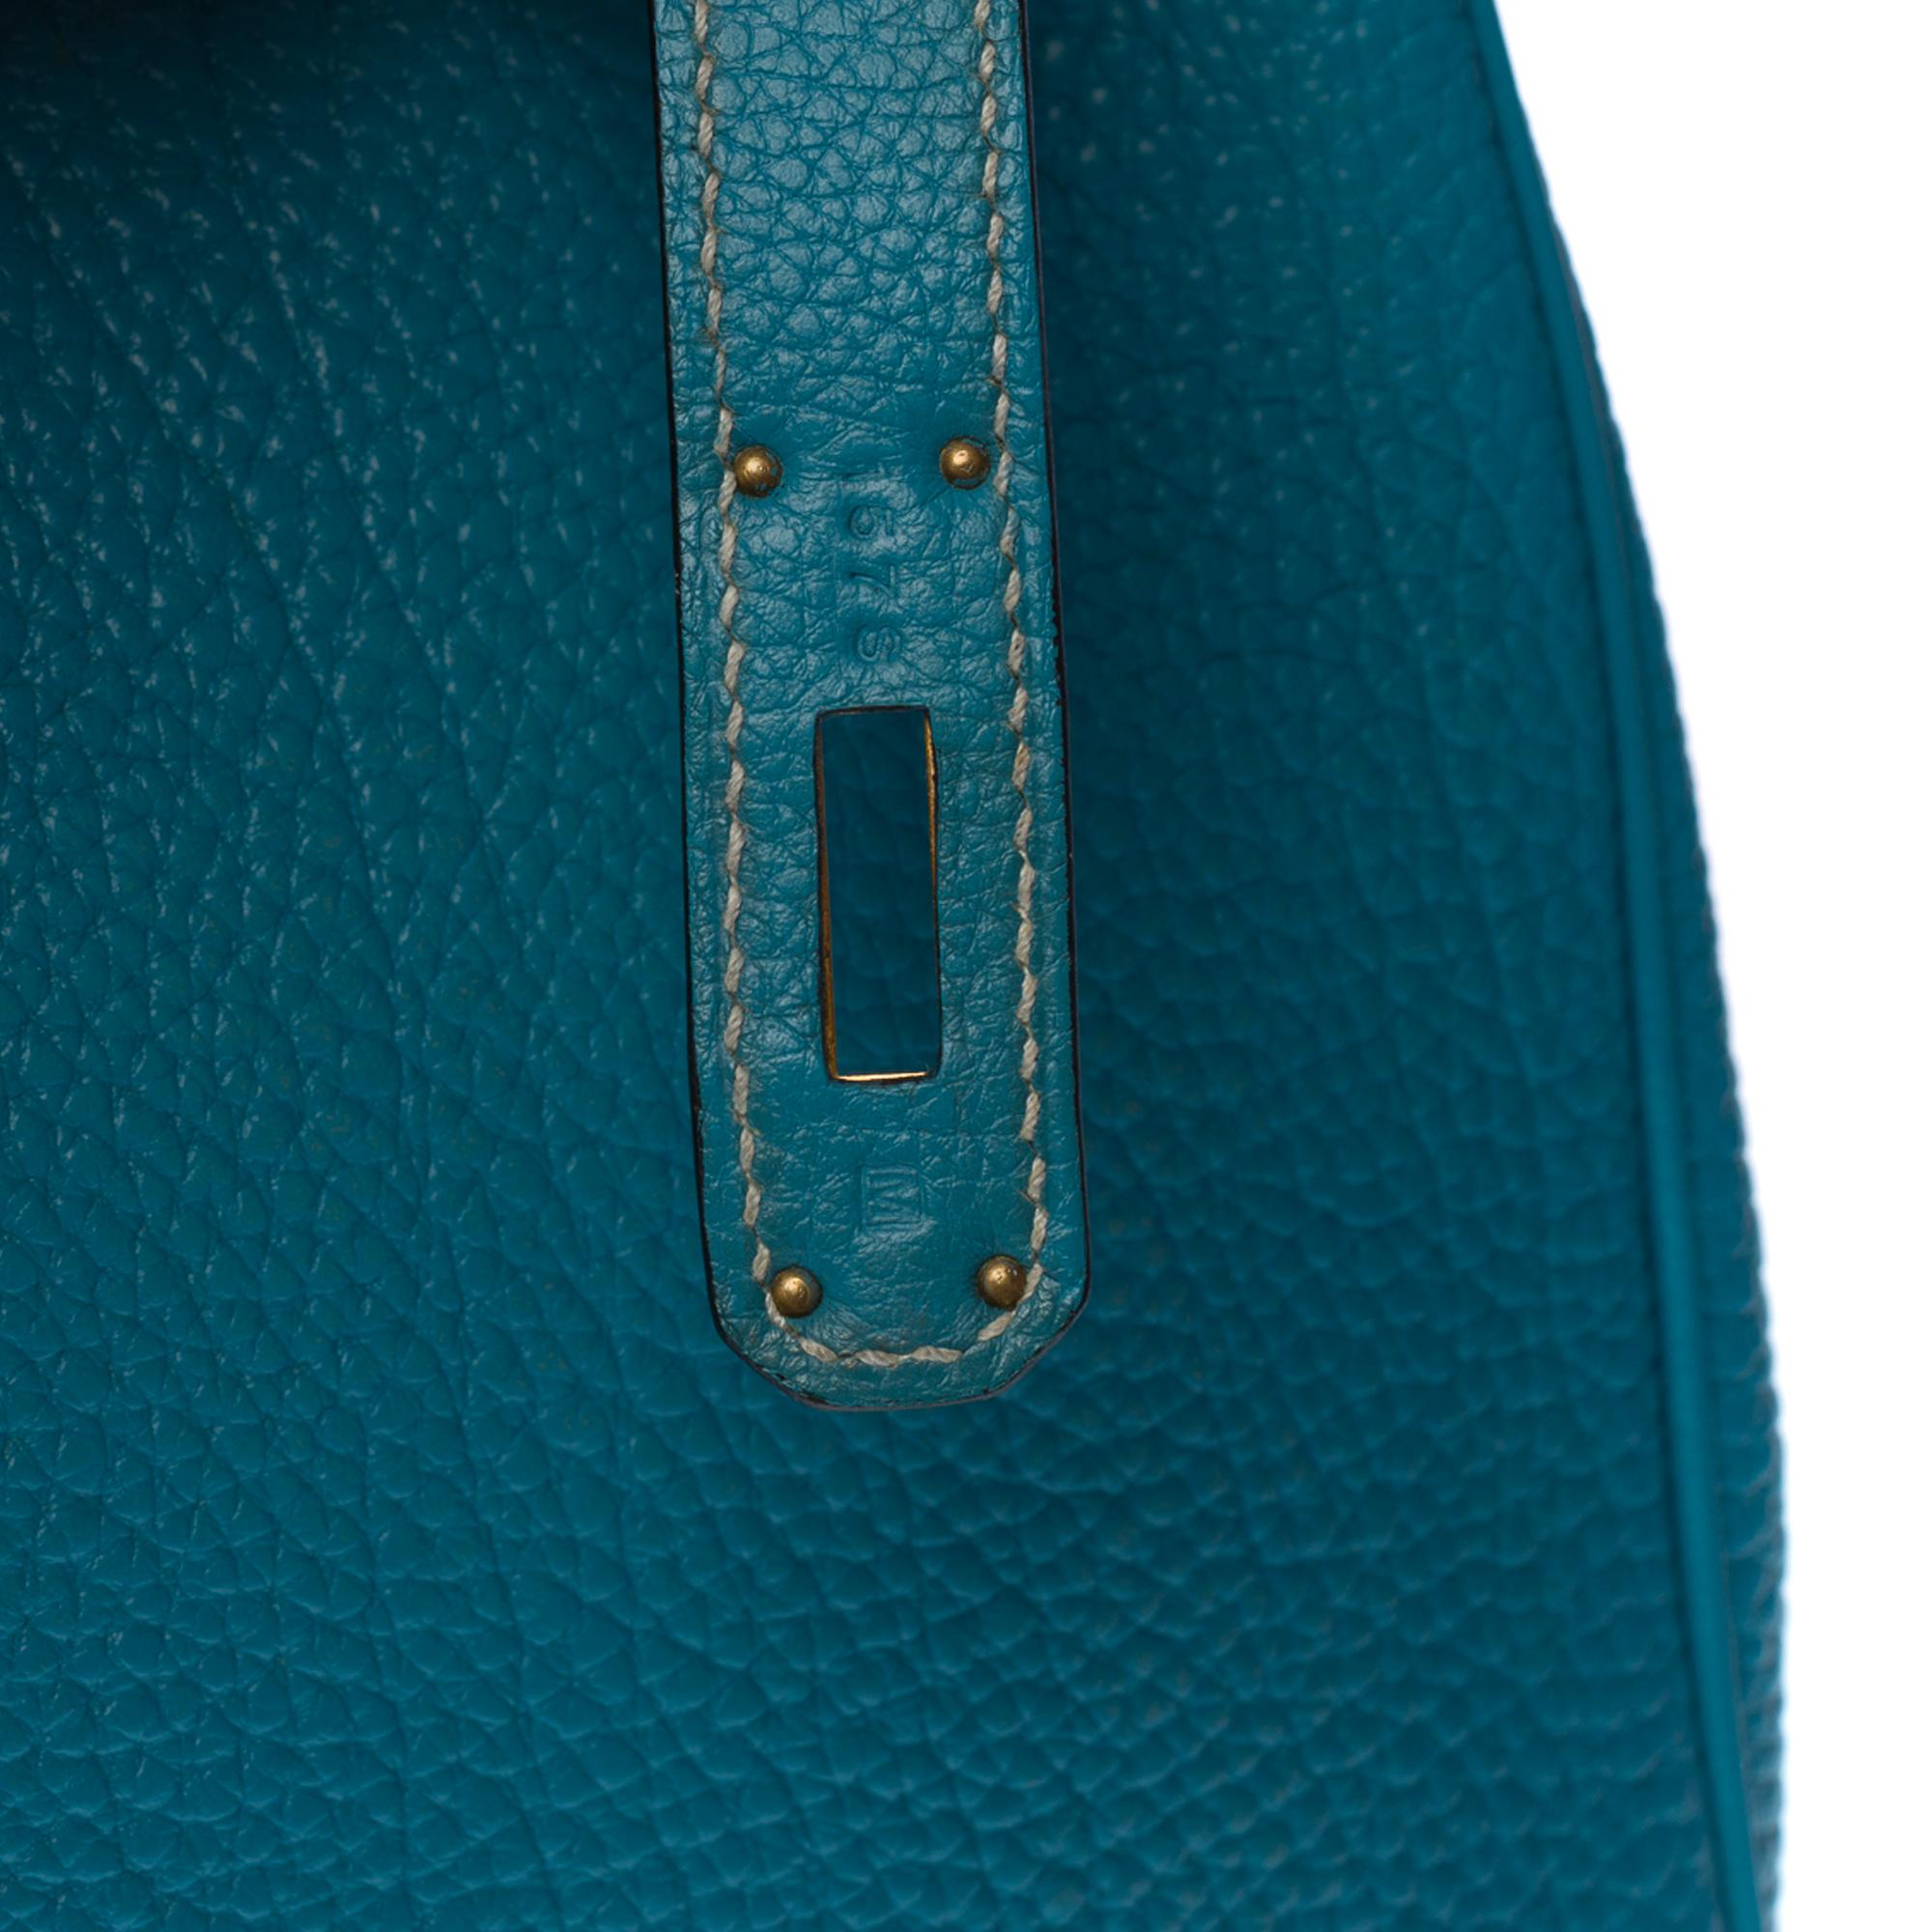 Magnificent Hermès Birkin 35 handbag in Bleu Saint-Cyr Togo leather, GHW 1